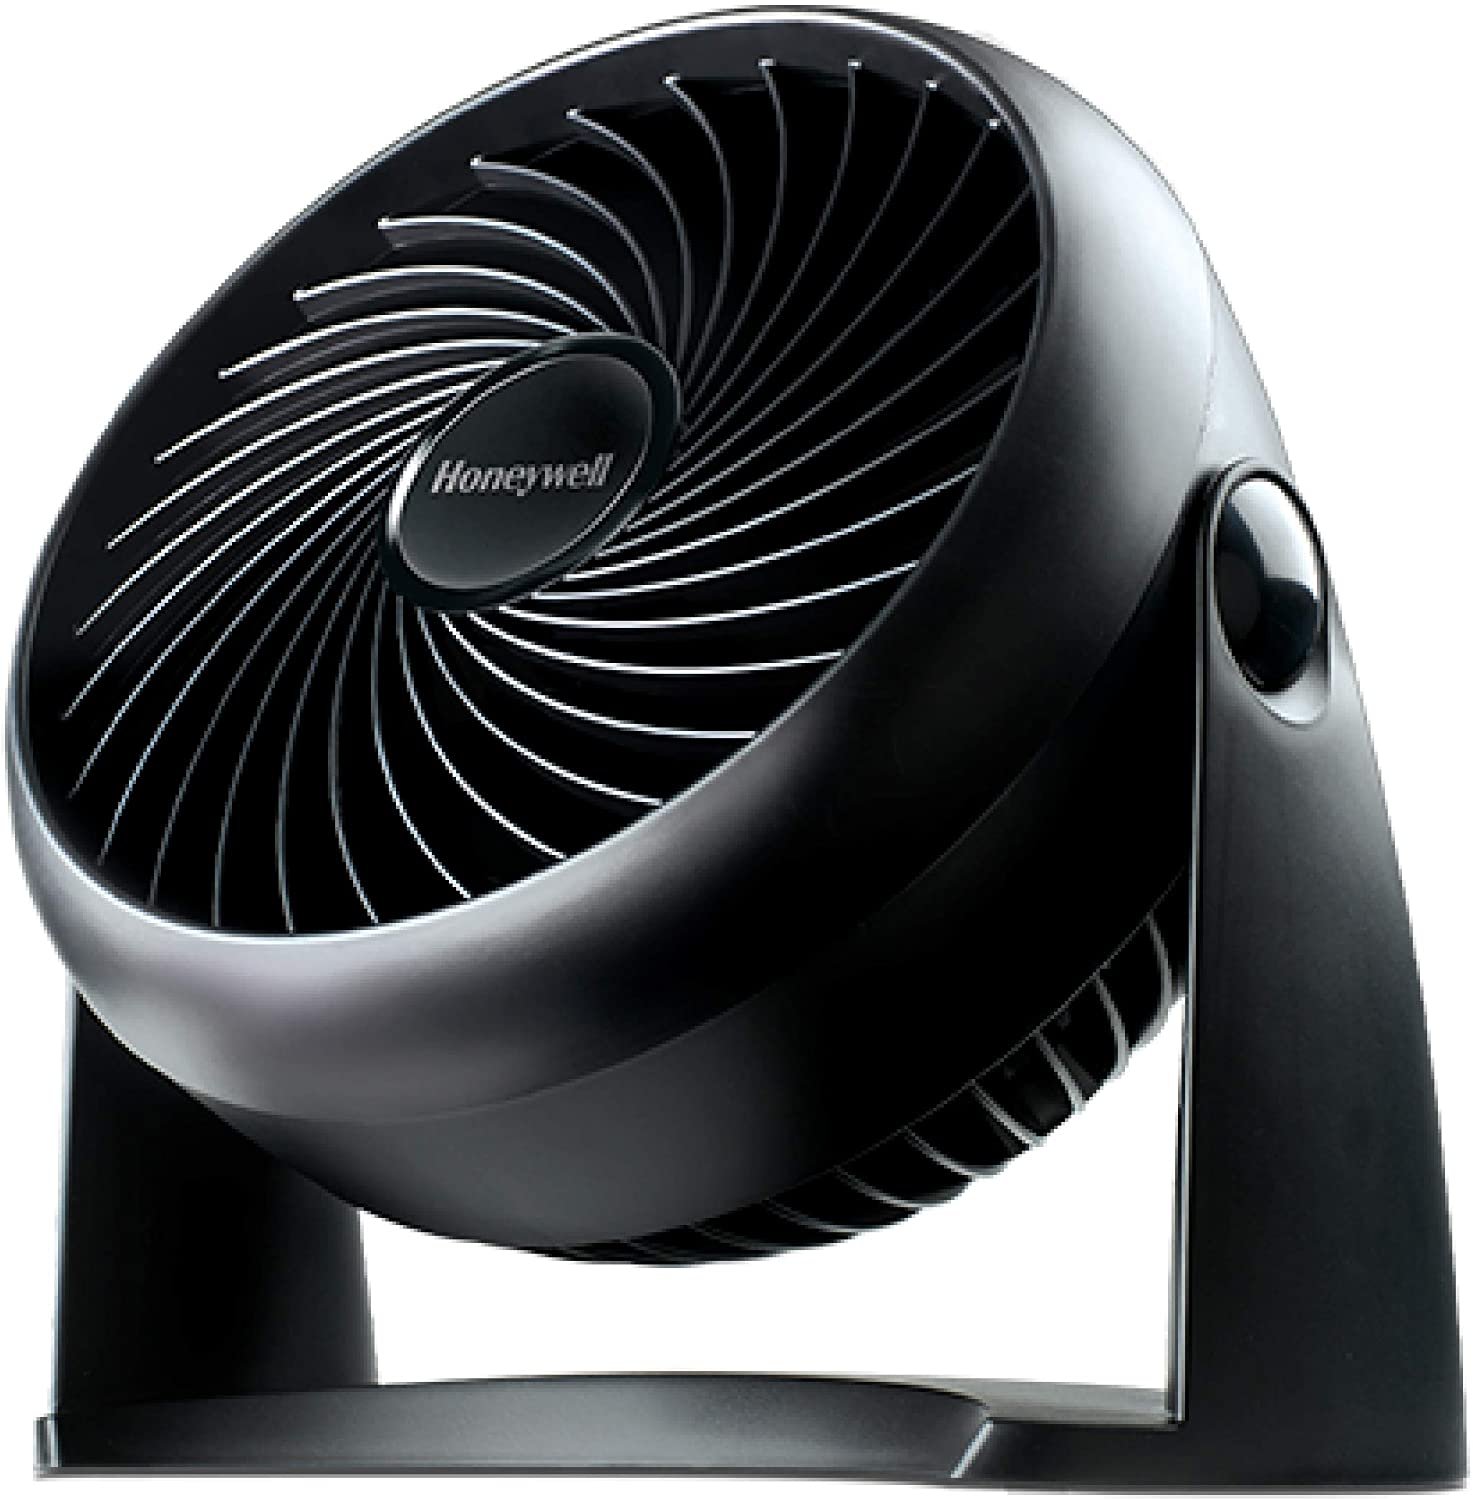 Honeywell HT-900 TurboForce Air Circulator Table Fan